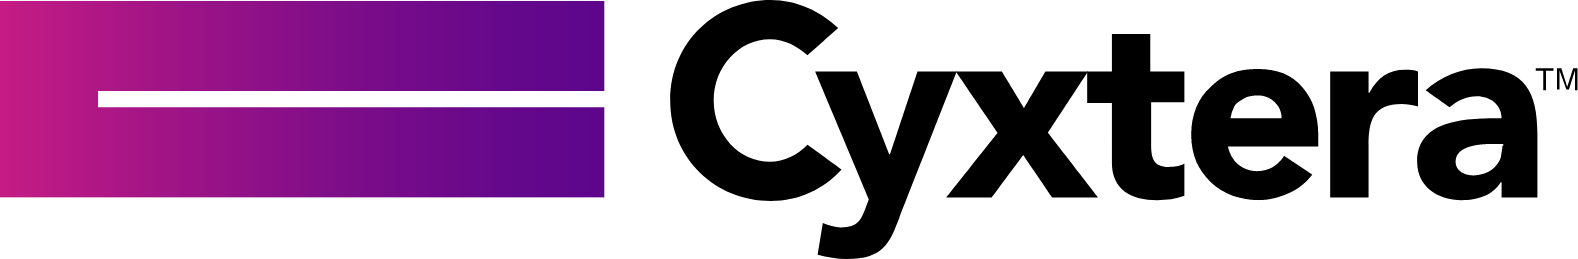 Cyxtera Technologies logo large (transparent PNG)